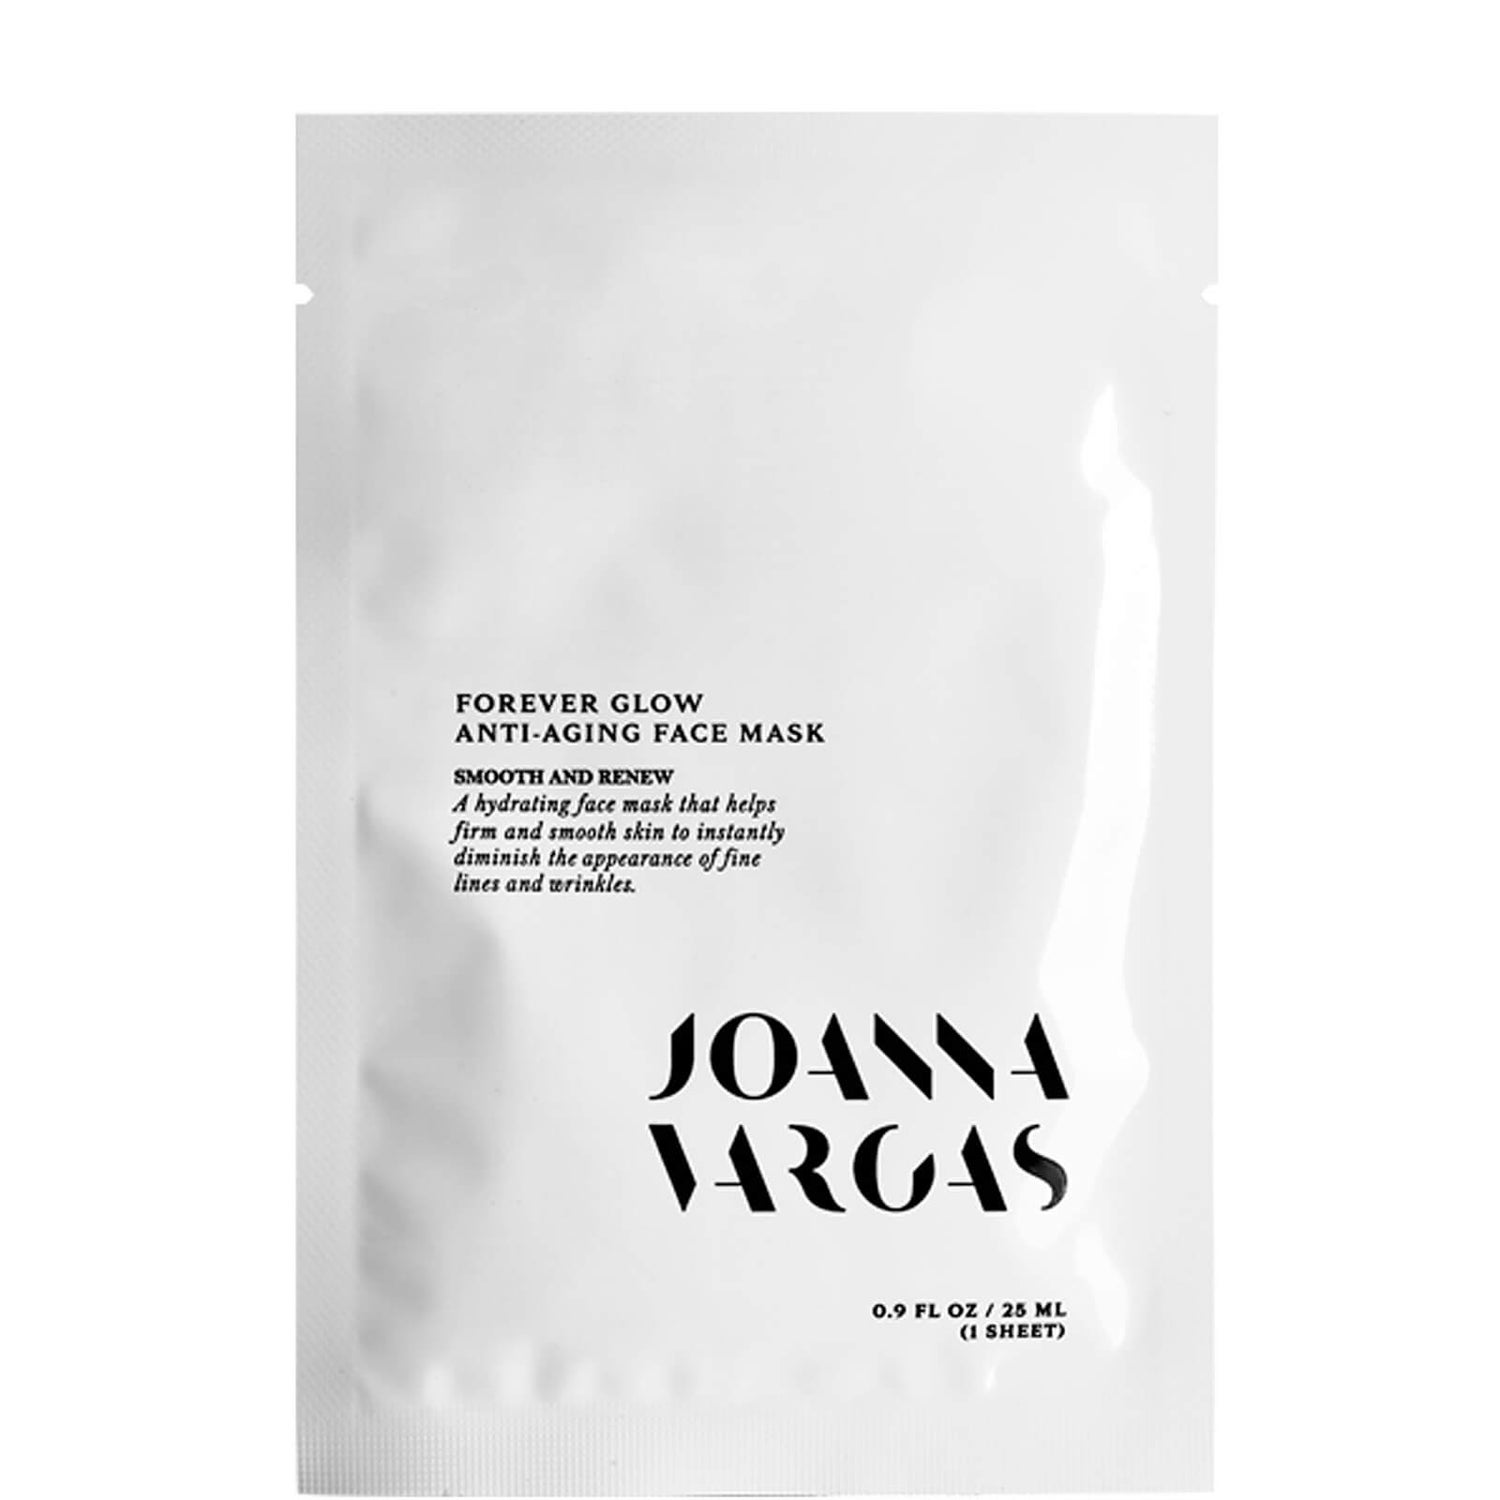 Joanna Vargas Forever Glow Anti-Aging Face Mask 4.5 fl. oz.